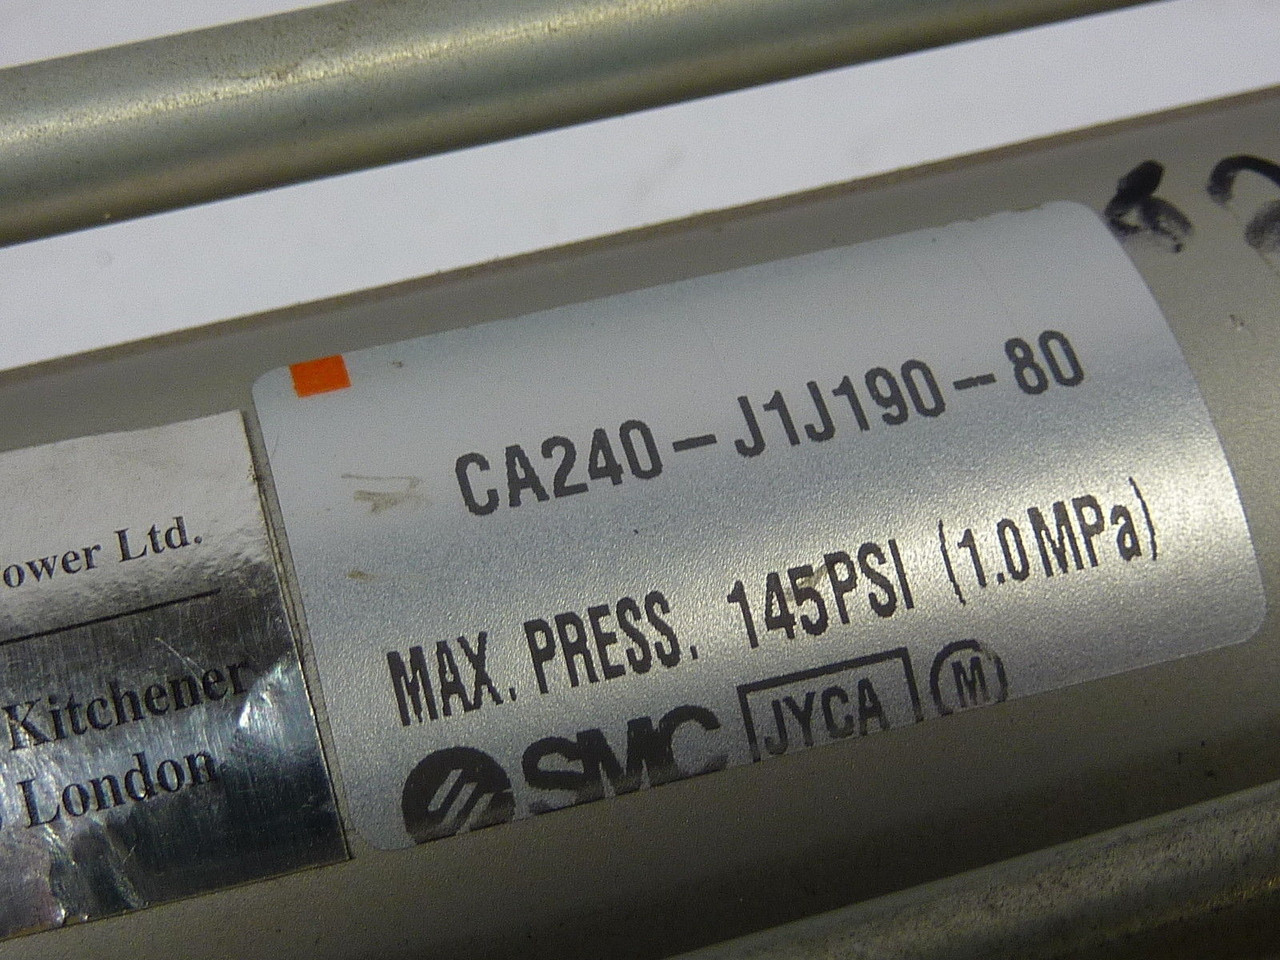 SMC CA240-J1J190-80 Pneumatic Actuator 145psi USED